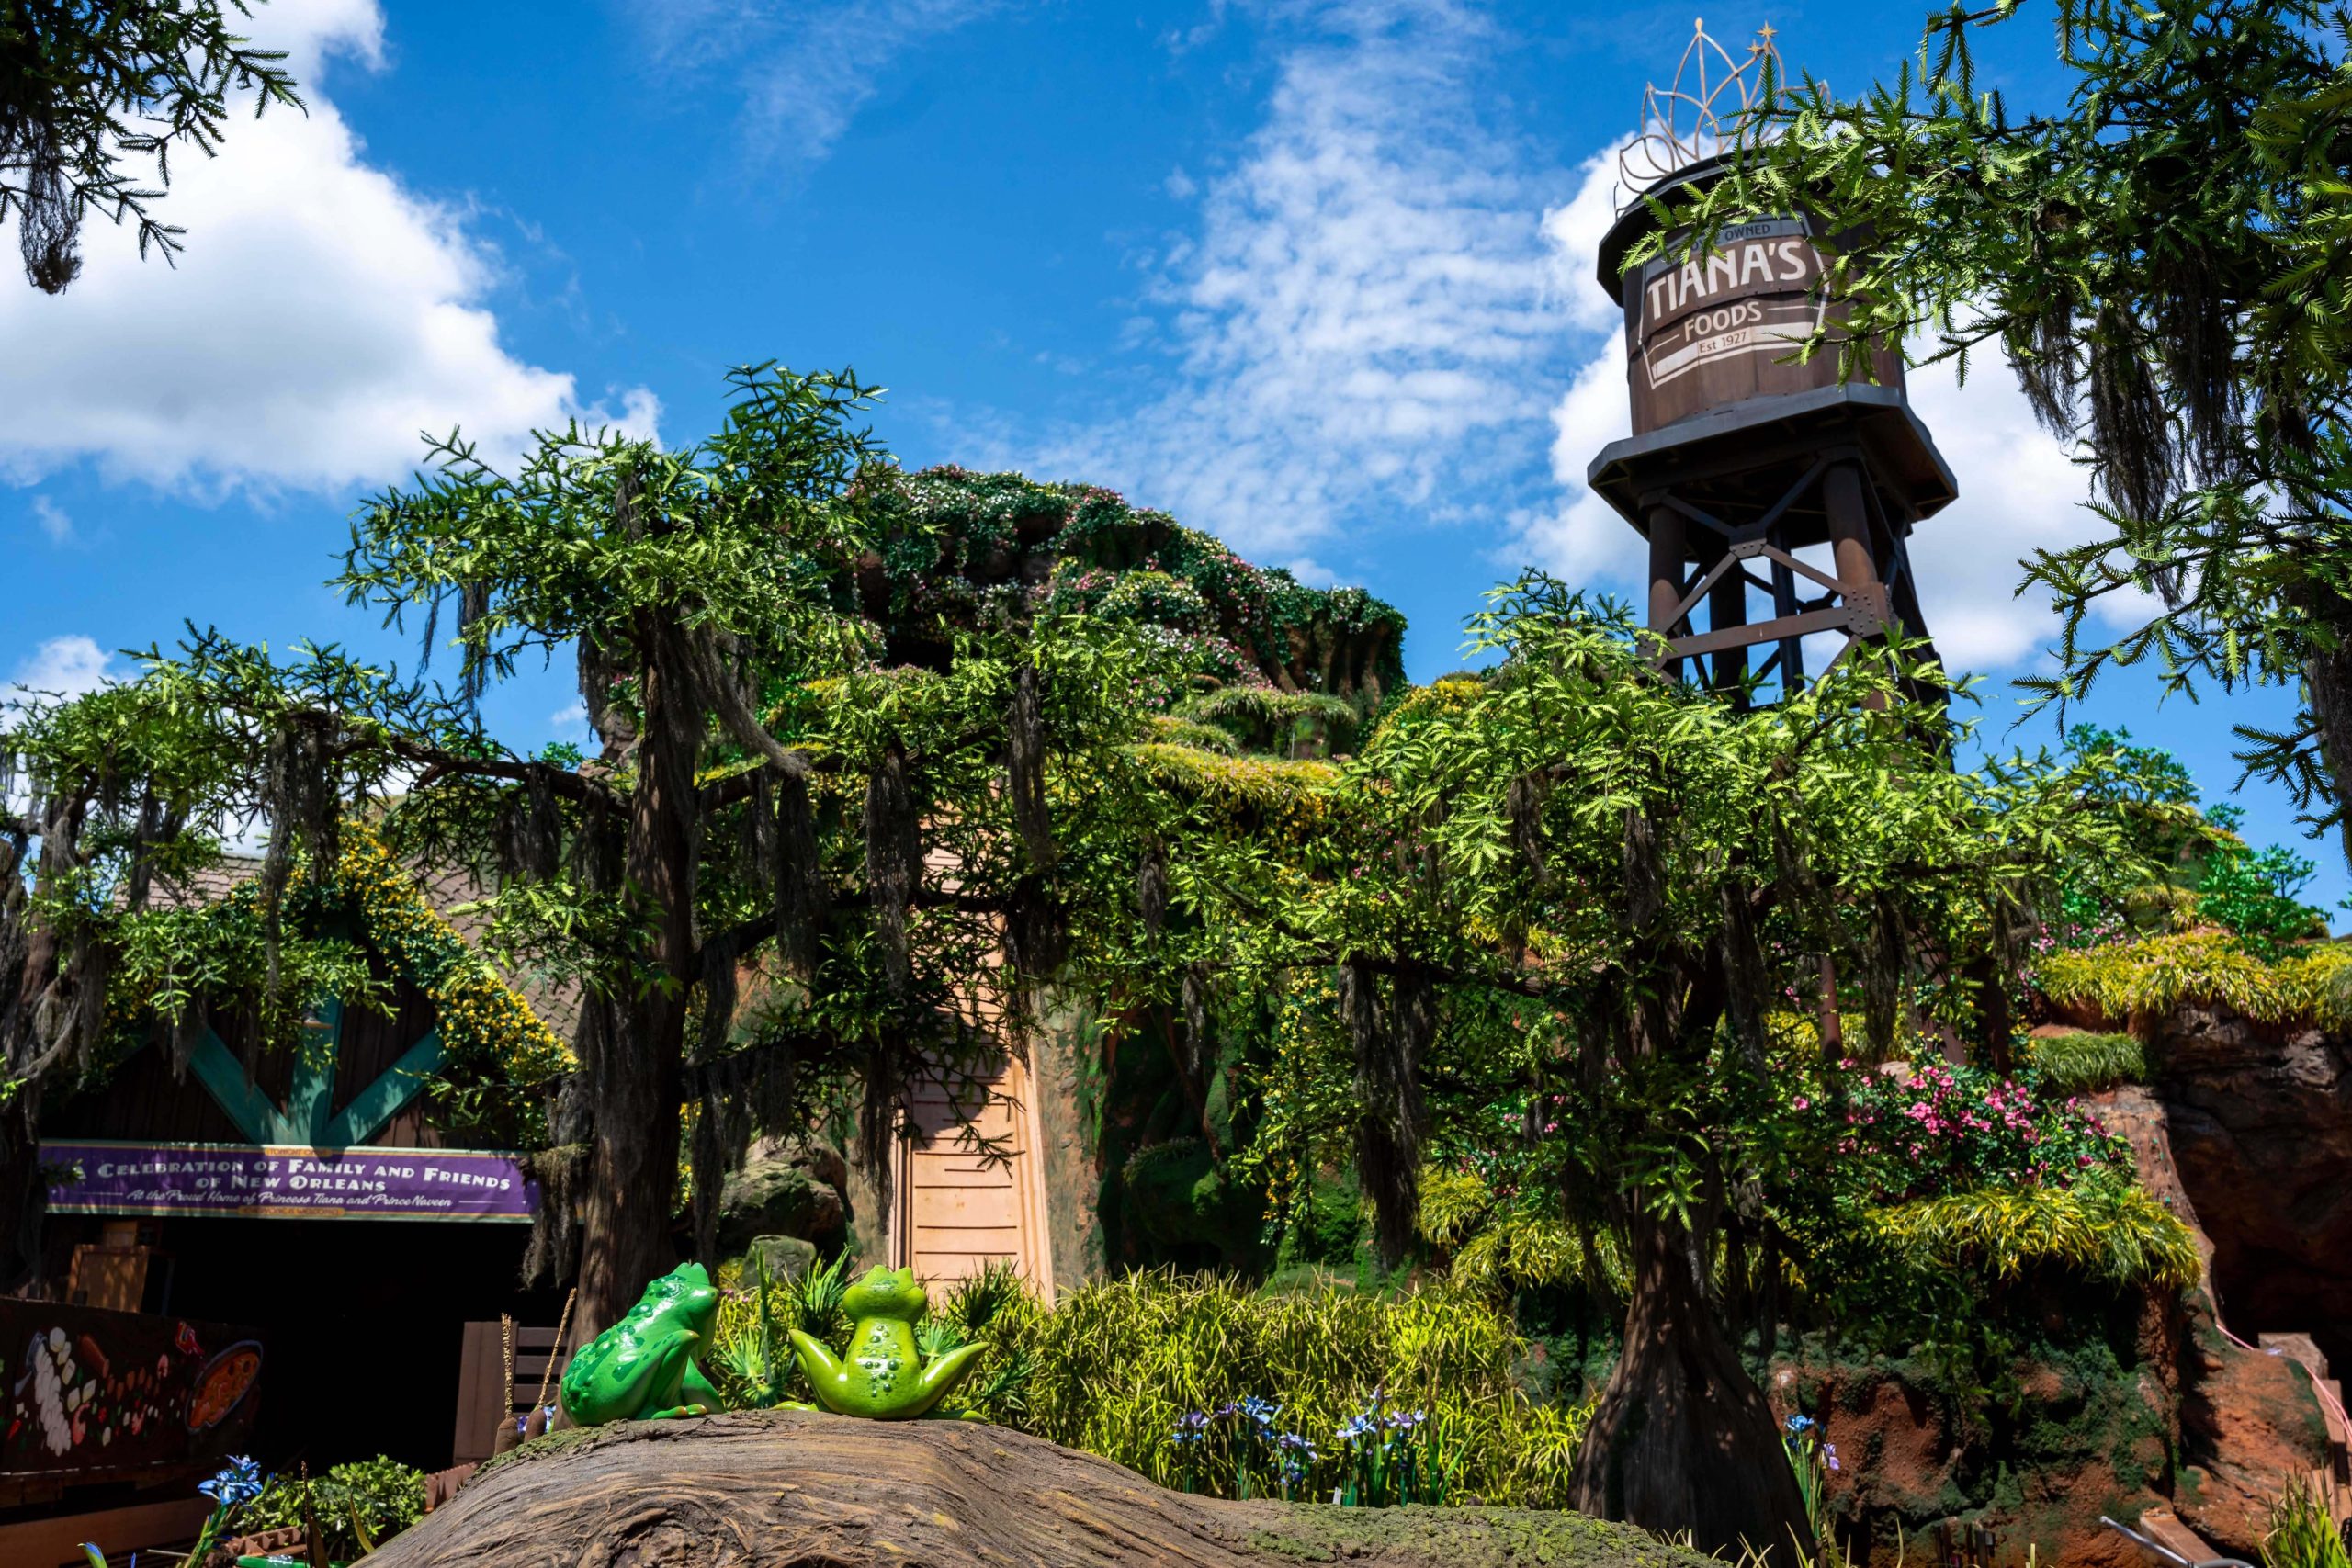 Tiana's Bayou Adventure Opens June 28 at Walt Disney World